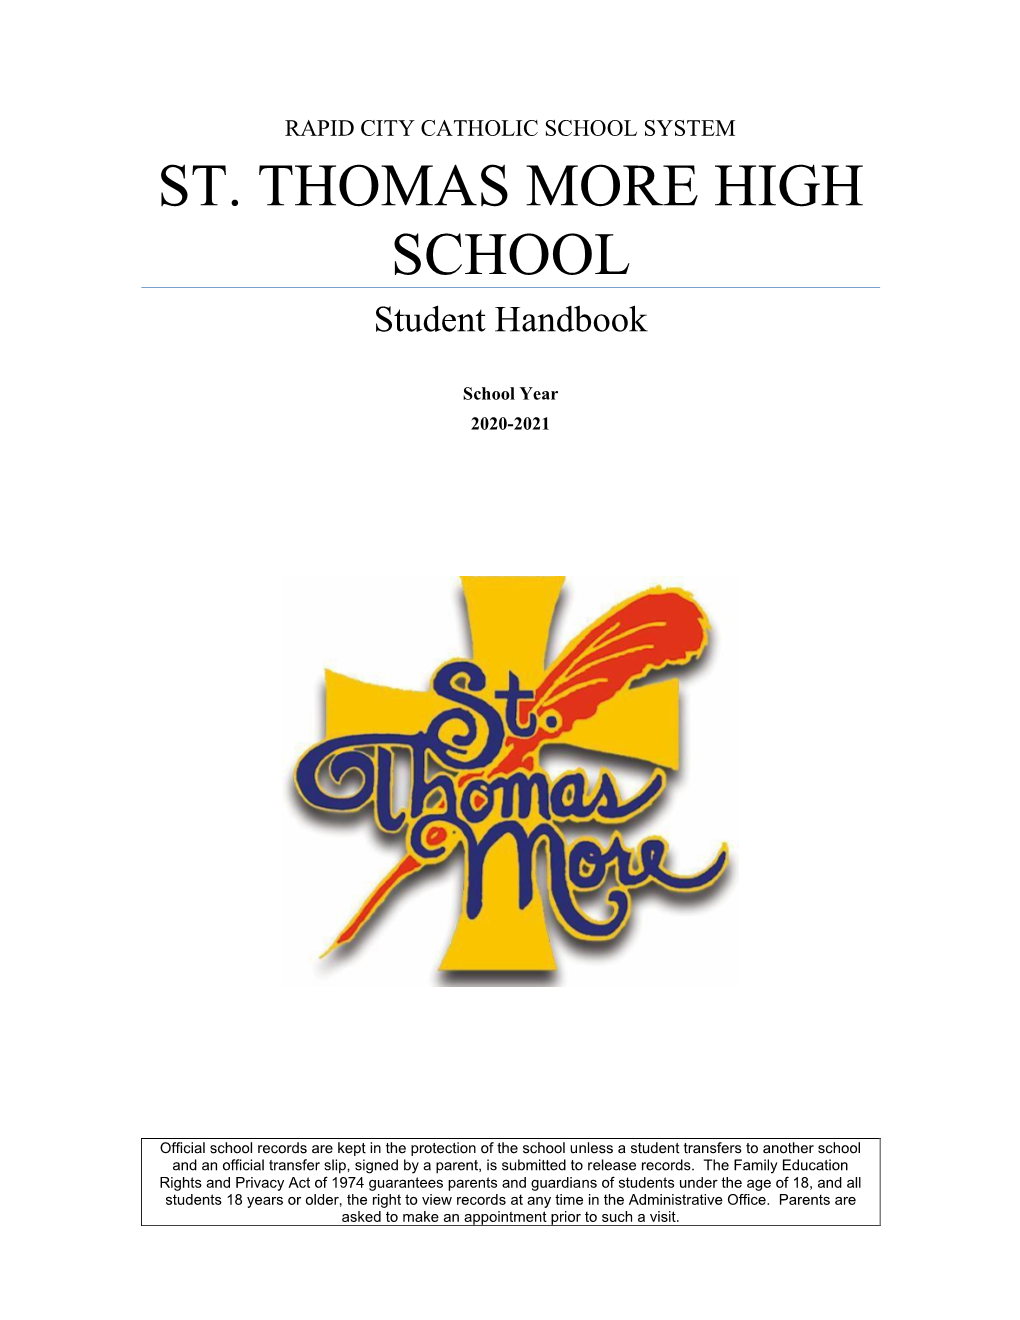 ST. THOMAS MORE HIGH SCHOOL Student Handbook